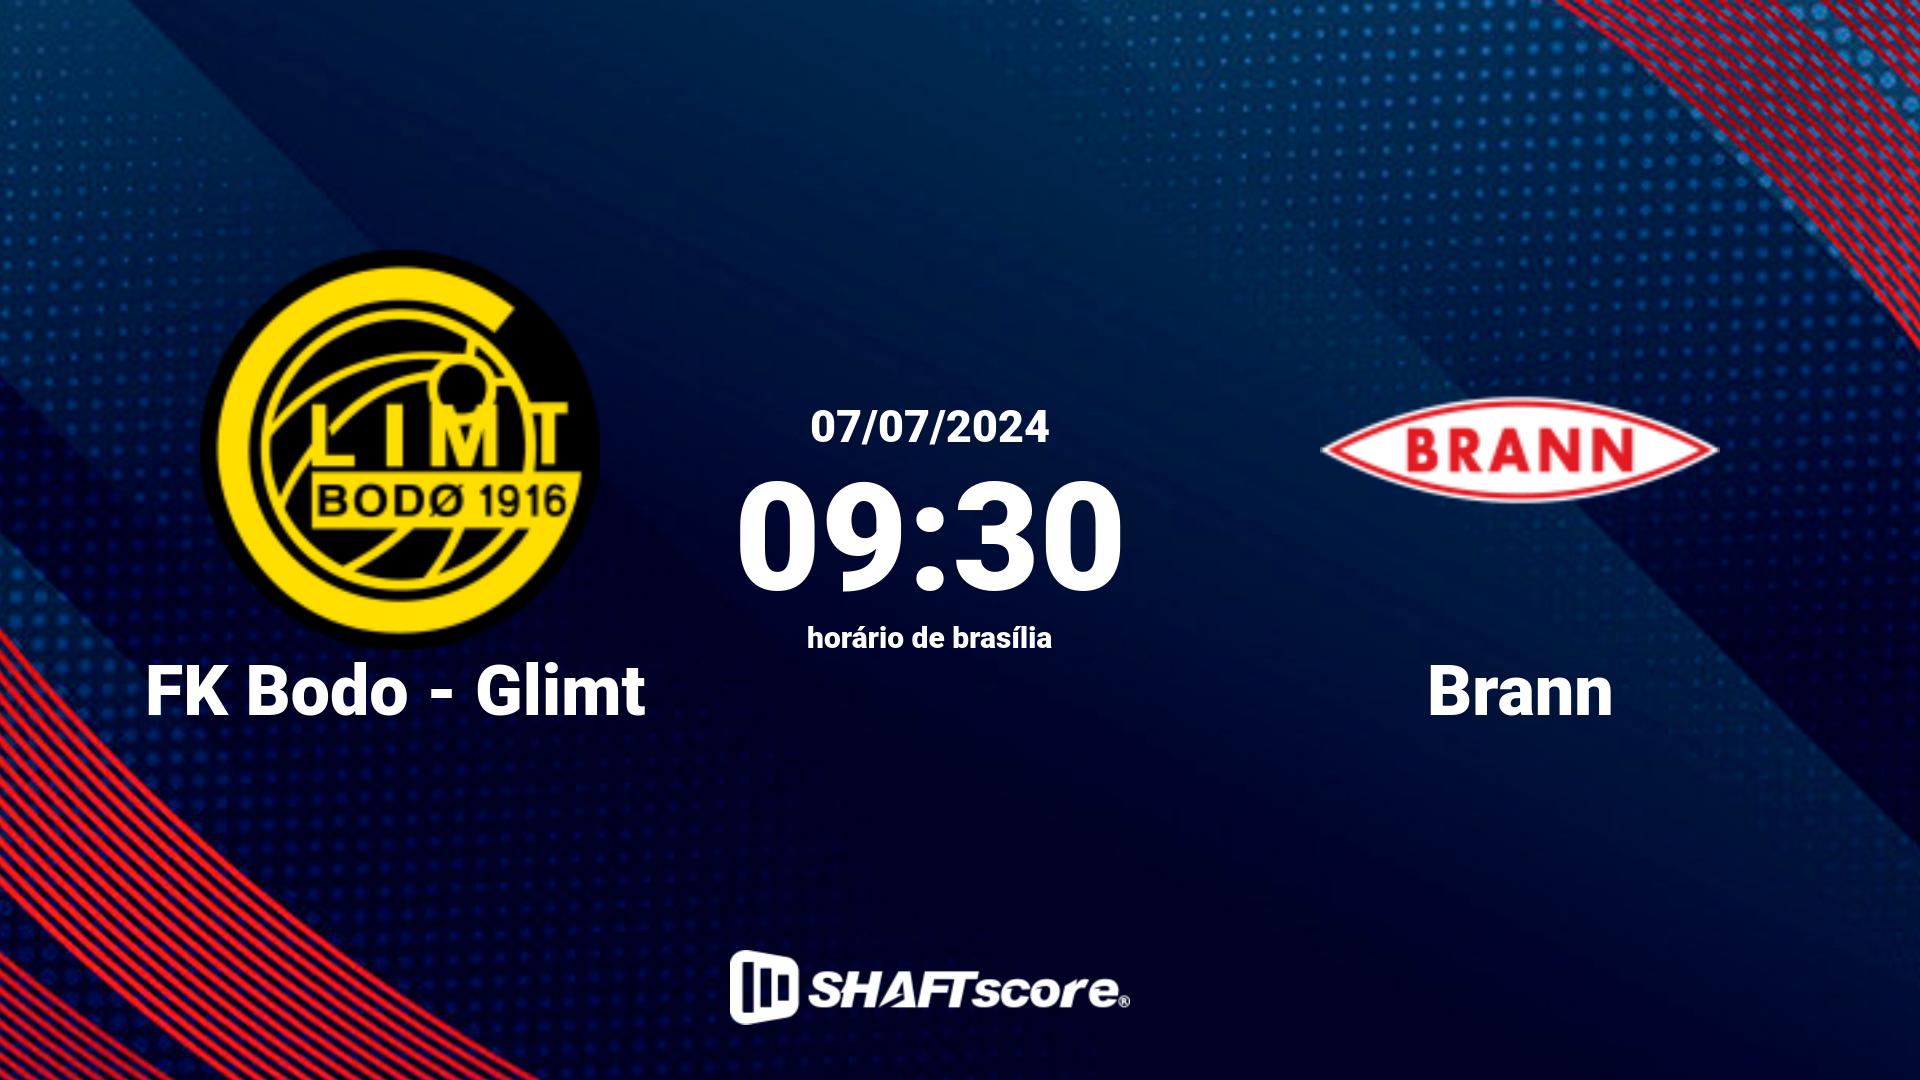 Estatísticas do jogo FK Bodo - Glimt vs Brann 07.07 09:30